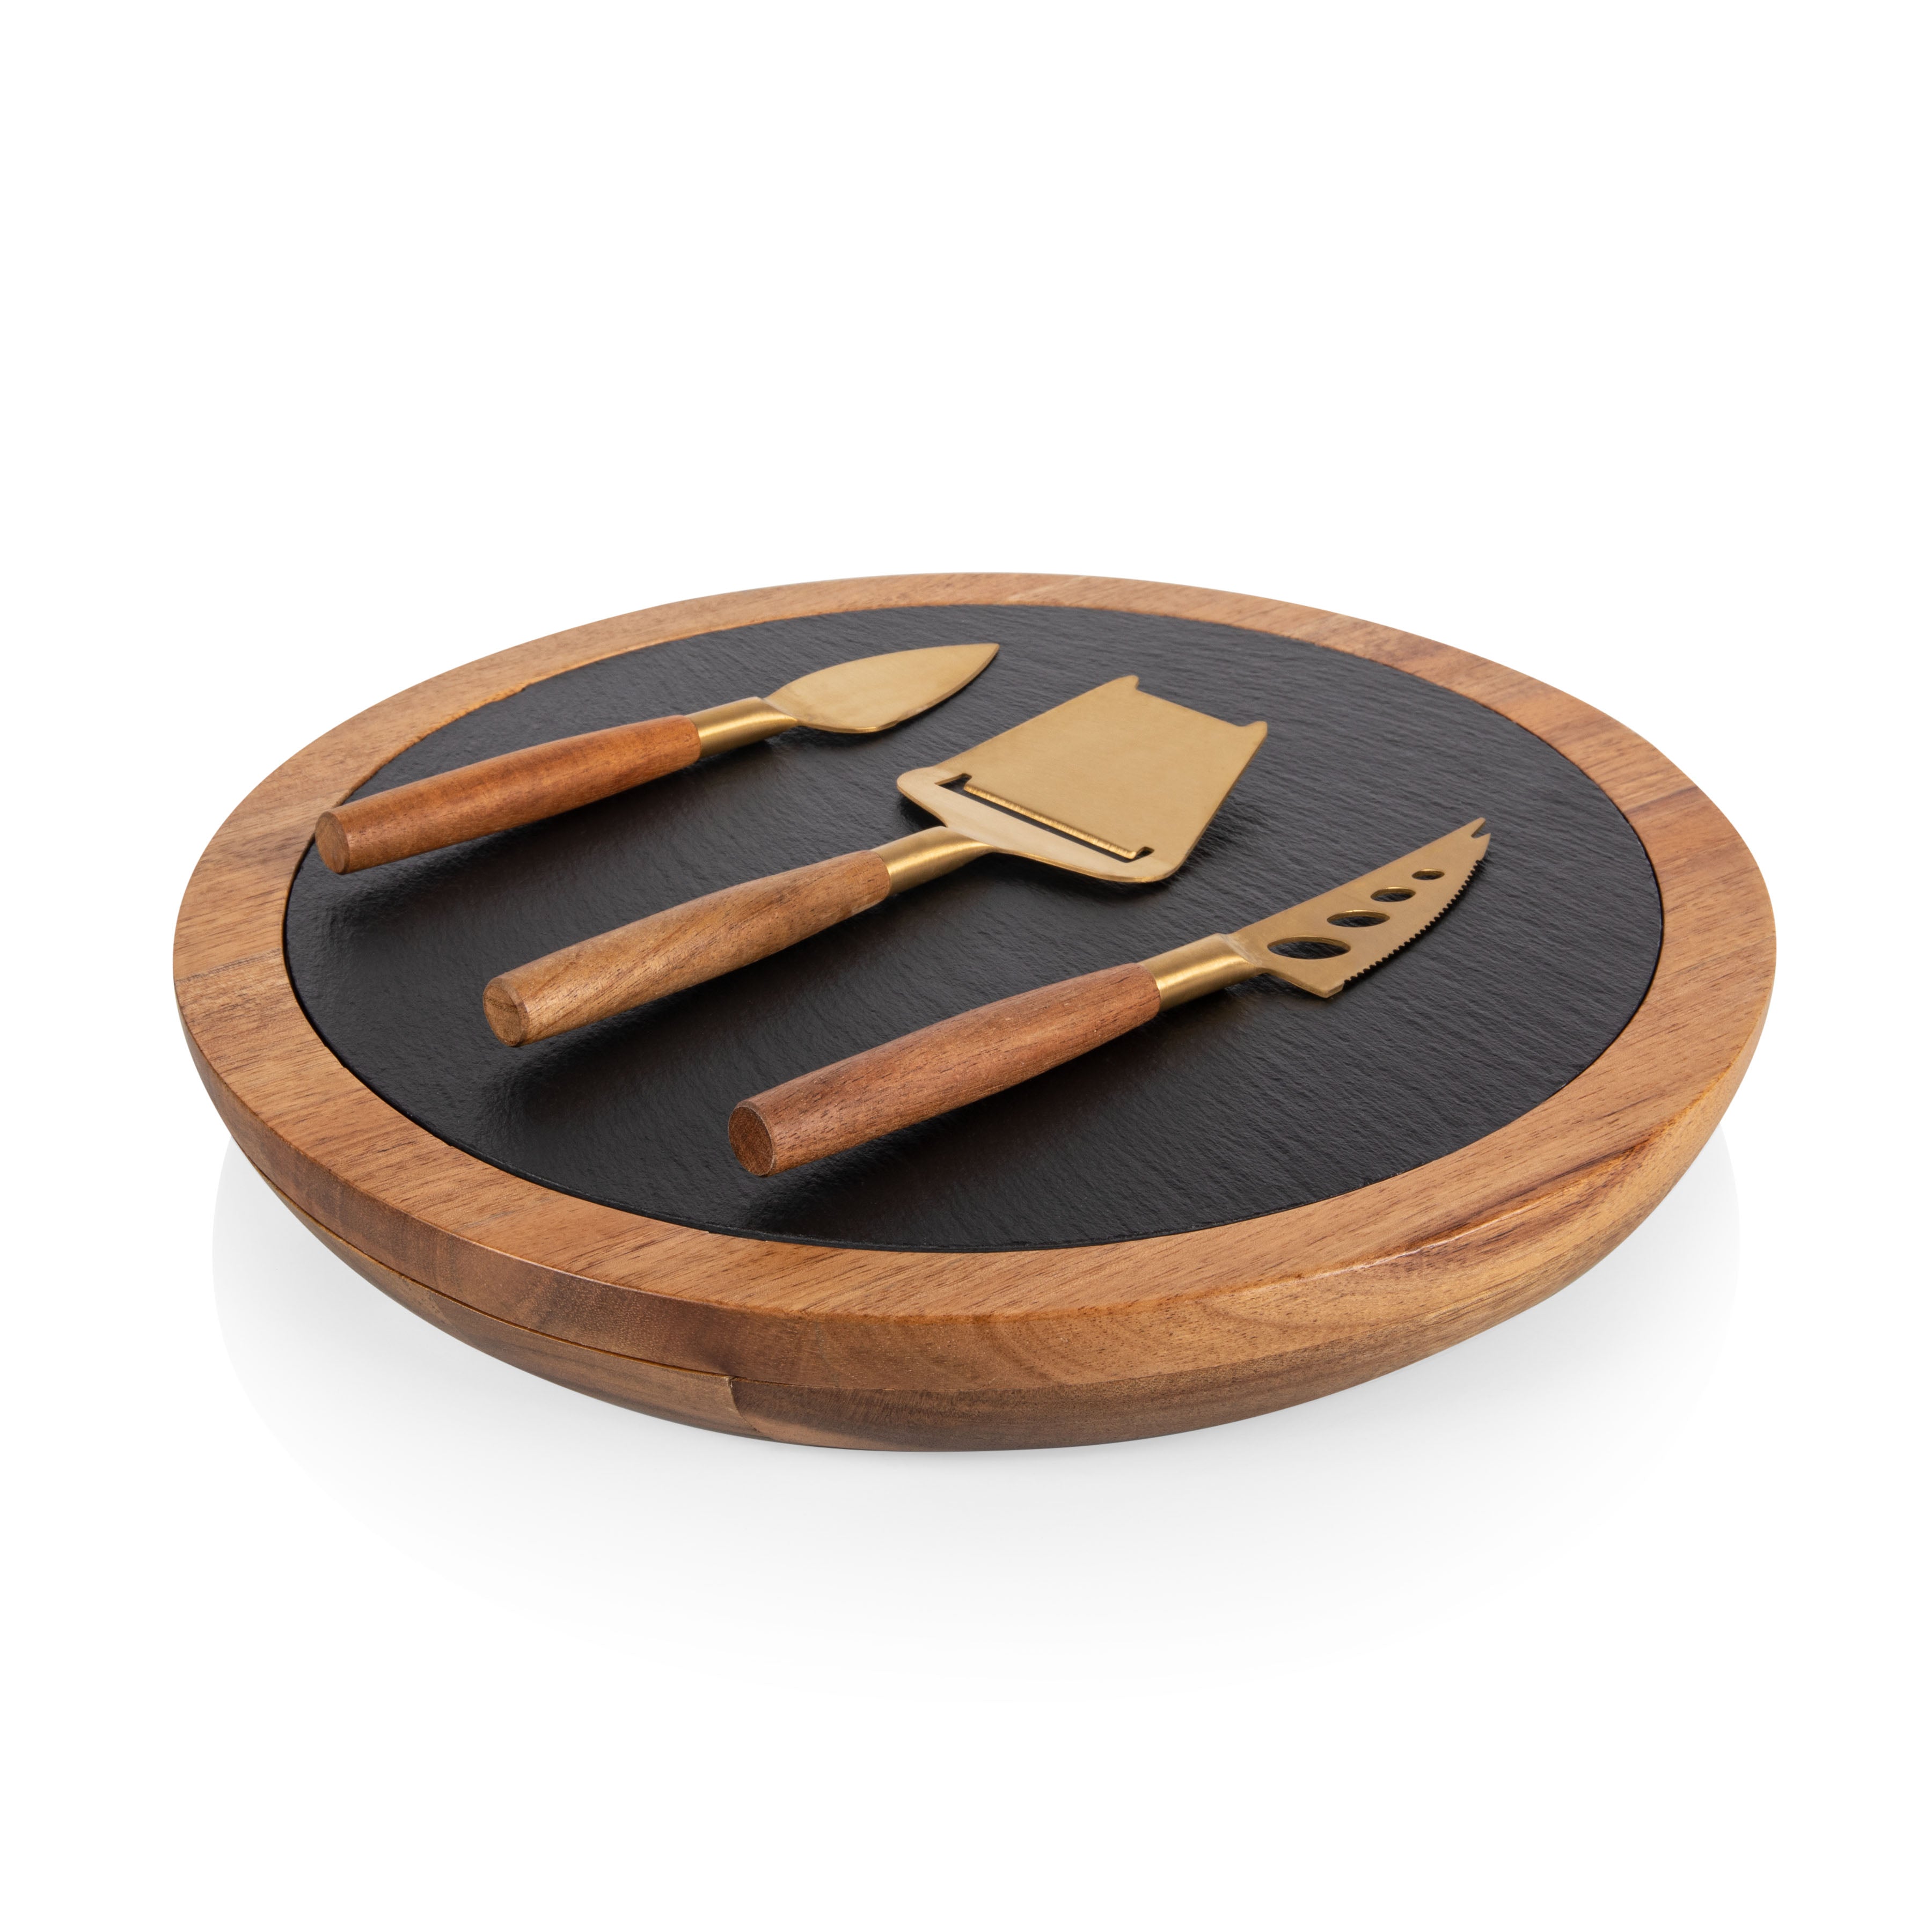 Buffalo Bills - Insignia Acacia and Slate Serving Board with Cheese Tools